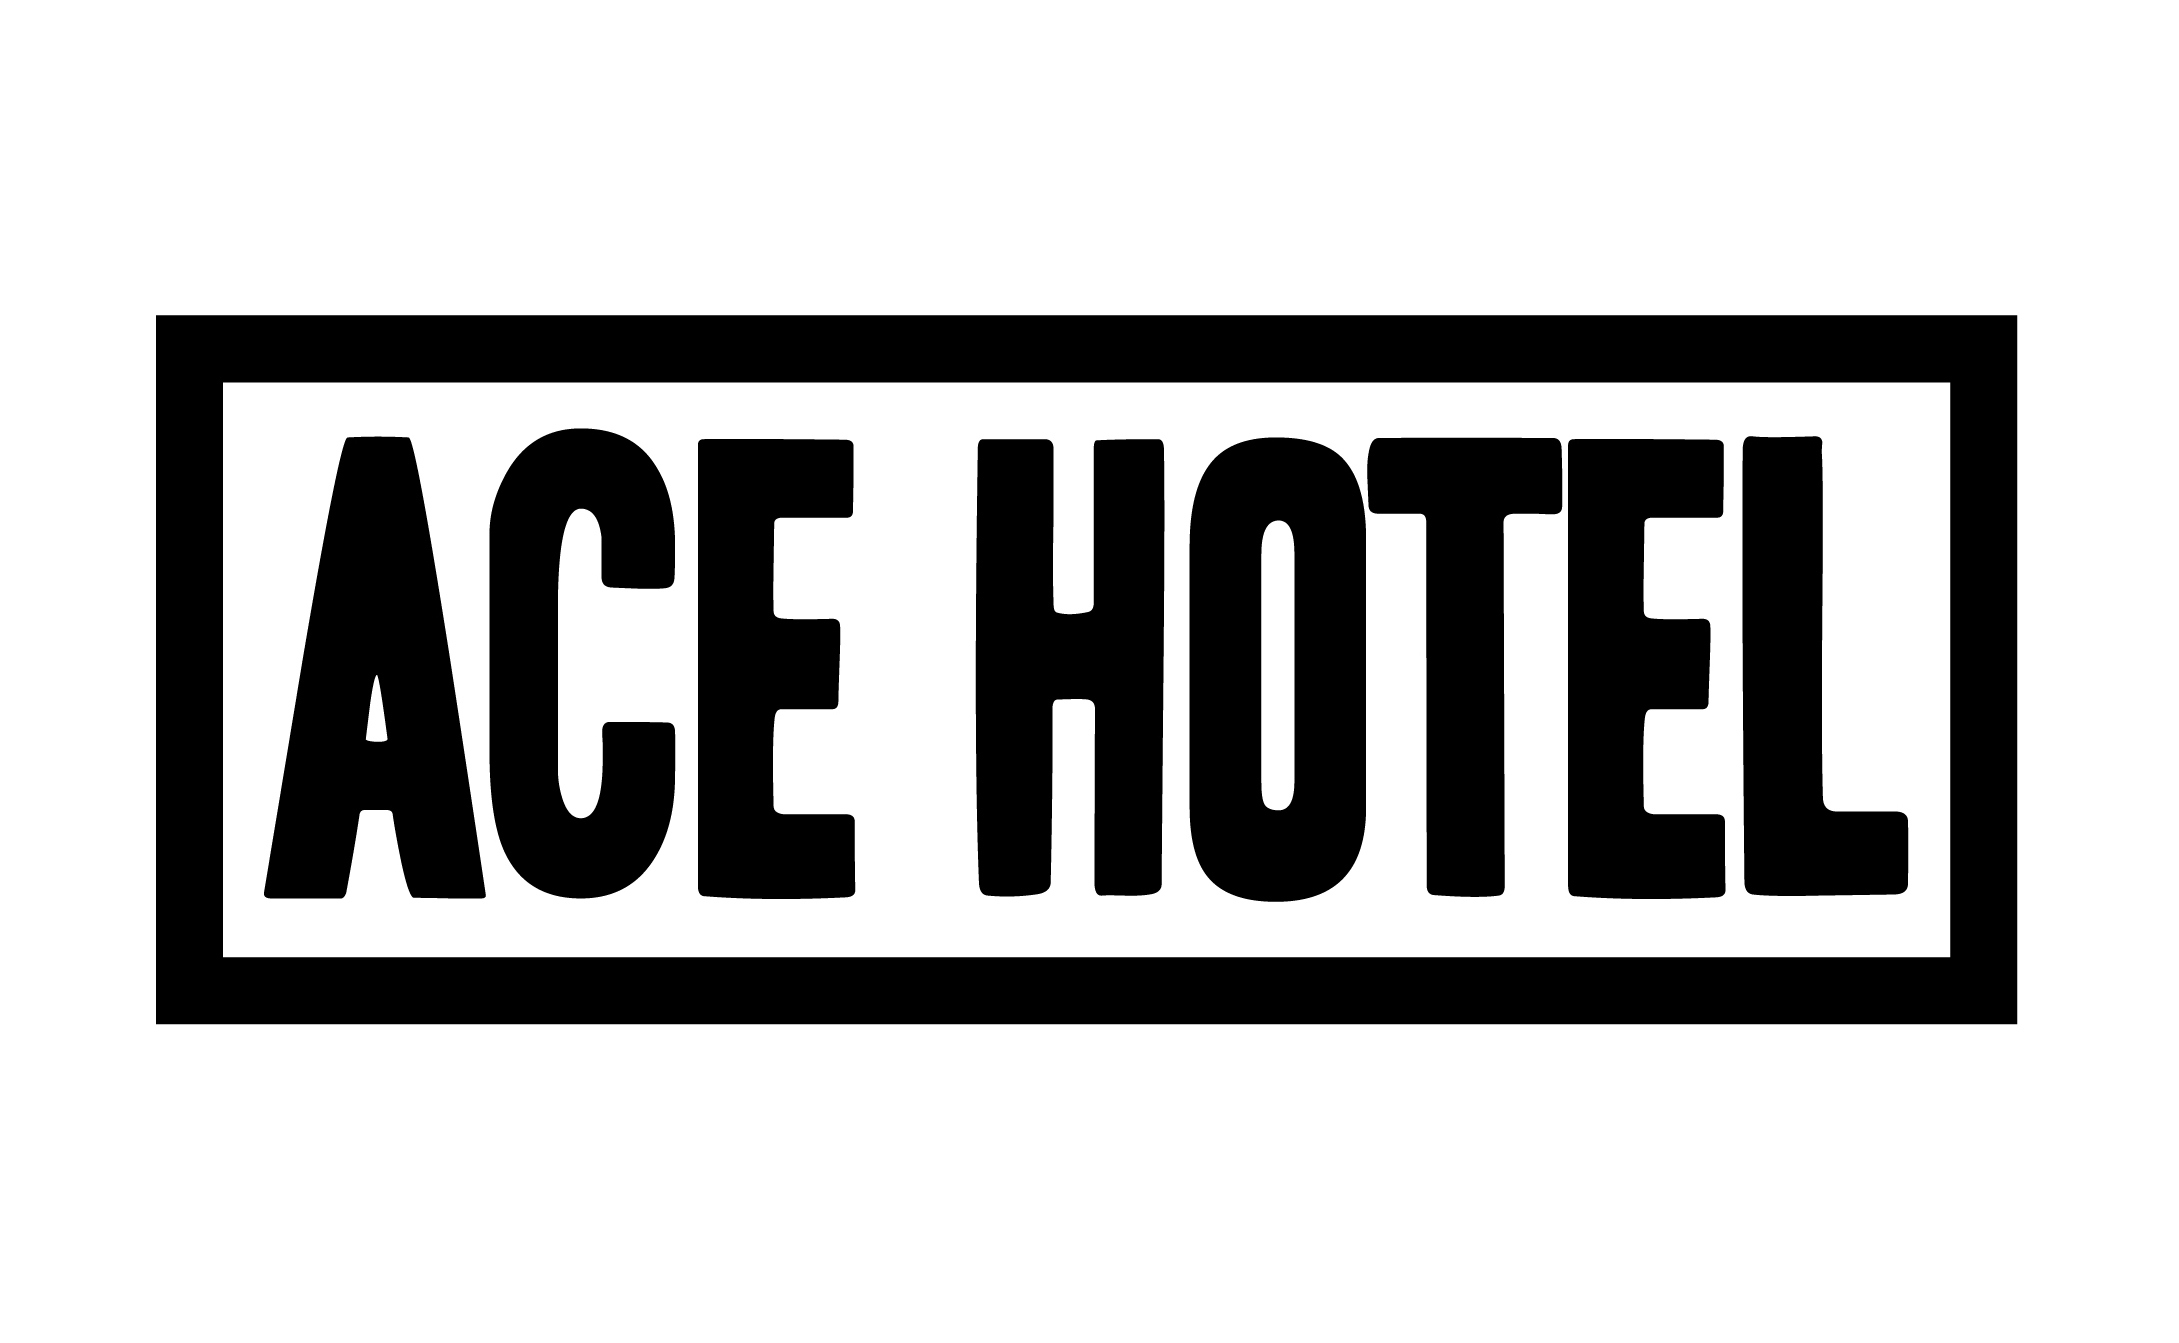 Ace Hotel logo